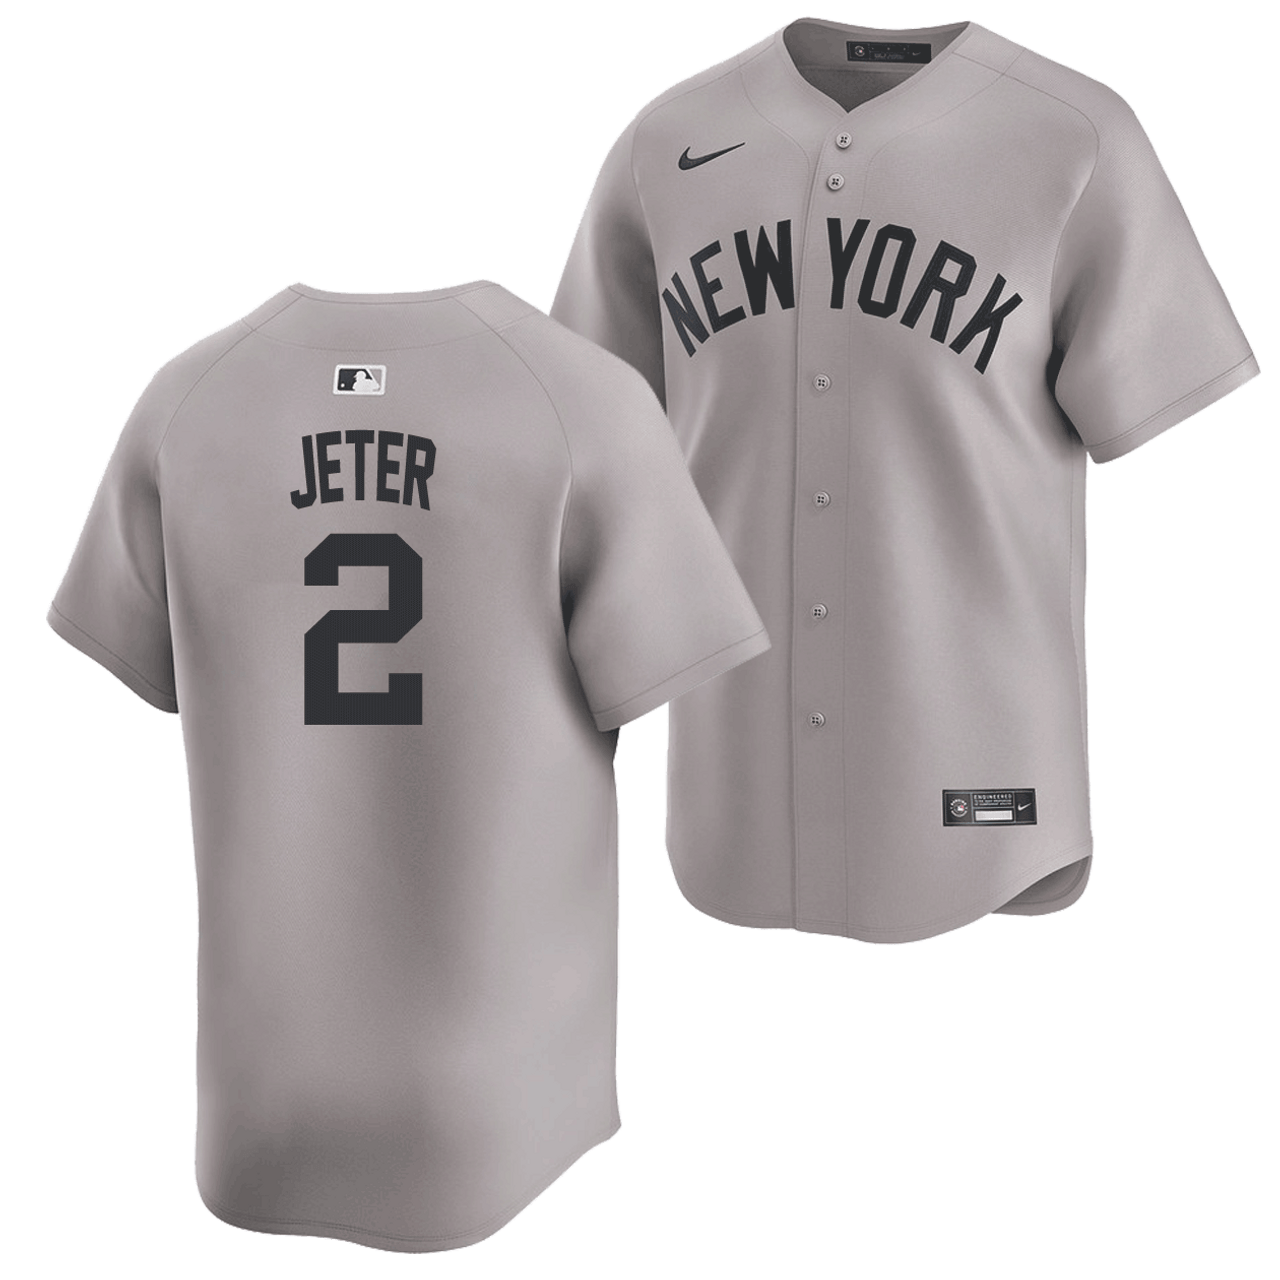 Derek Jeter NY Yankees Limited Road Jersey